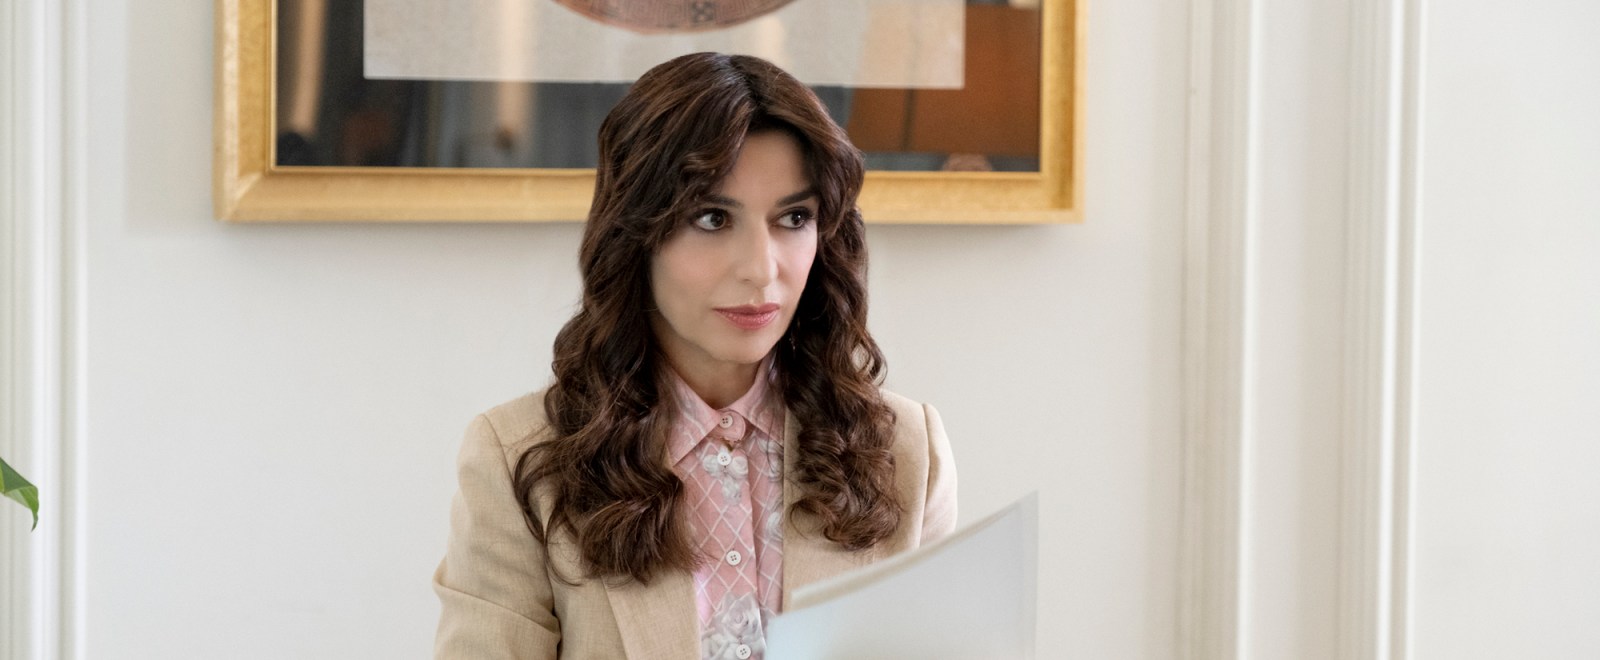 Sabrina Impacciatore in 'The White Lotus' Season 2